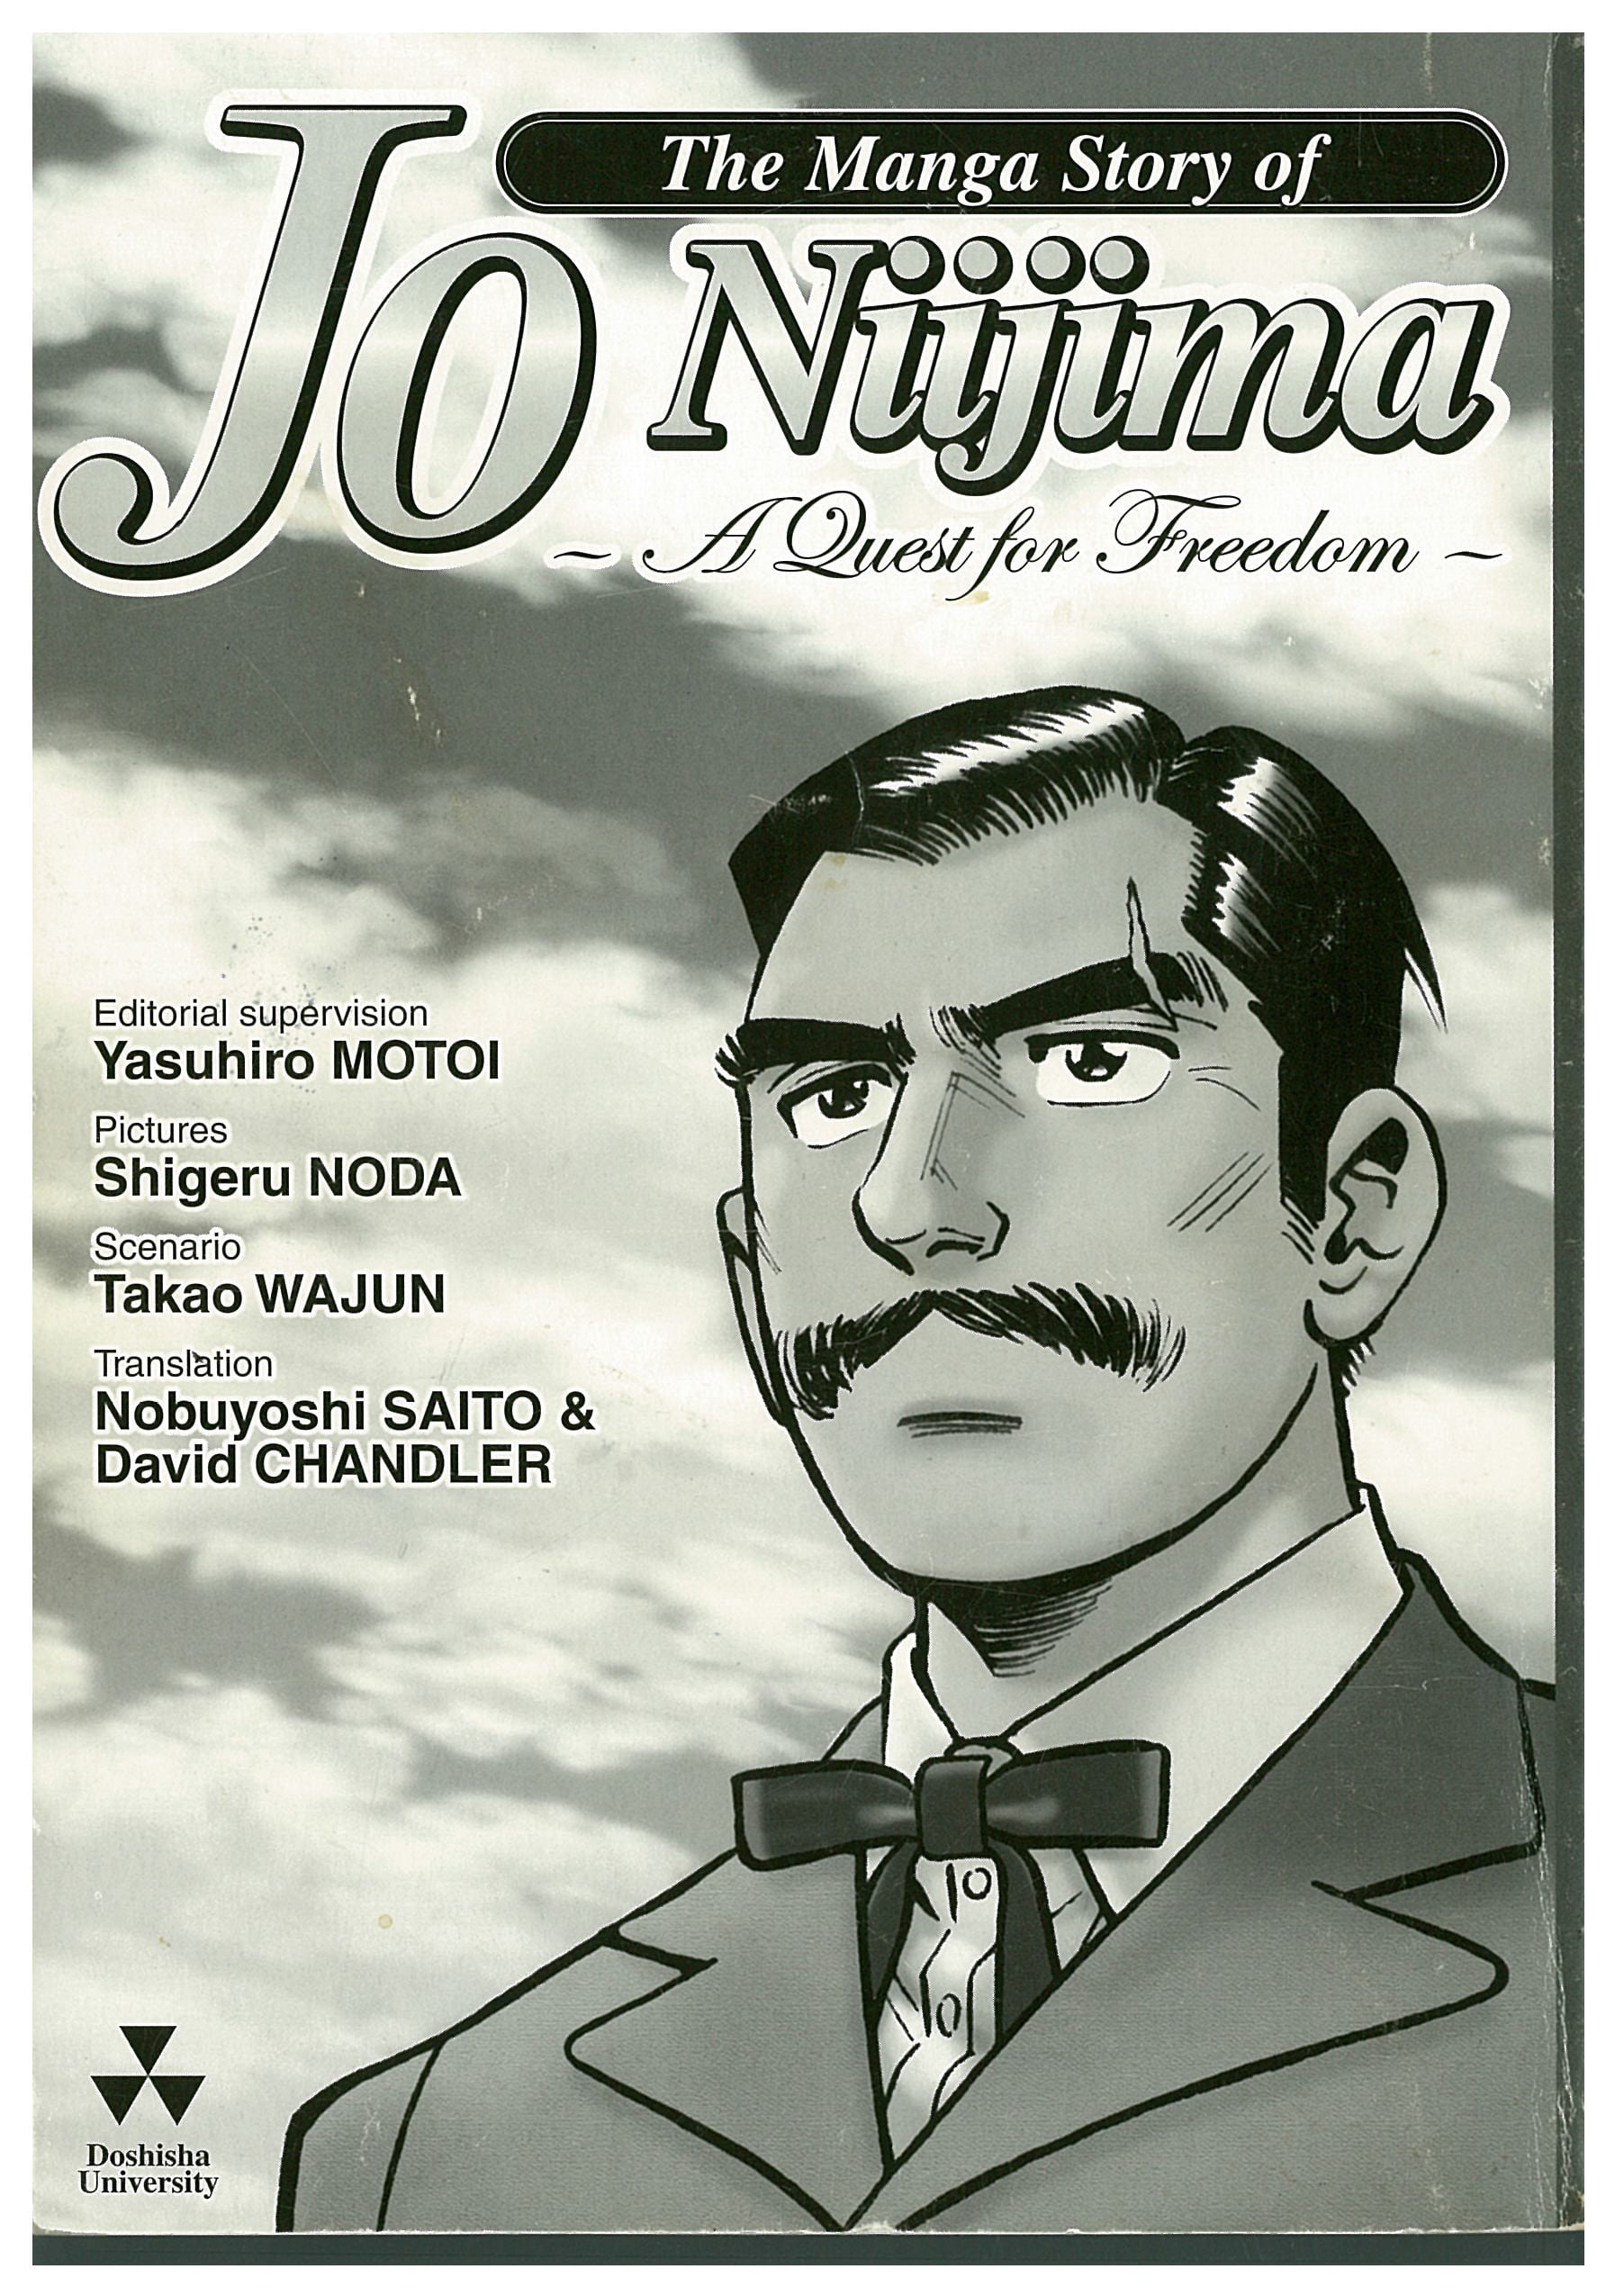 Motoi, Yasuhiro. The Manga story of Jo Niijima: a quest for freedom. Kyoto: Doshisha University, 2009. 